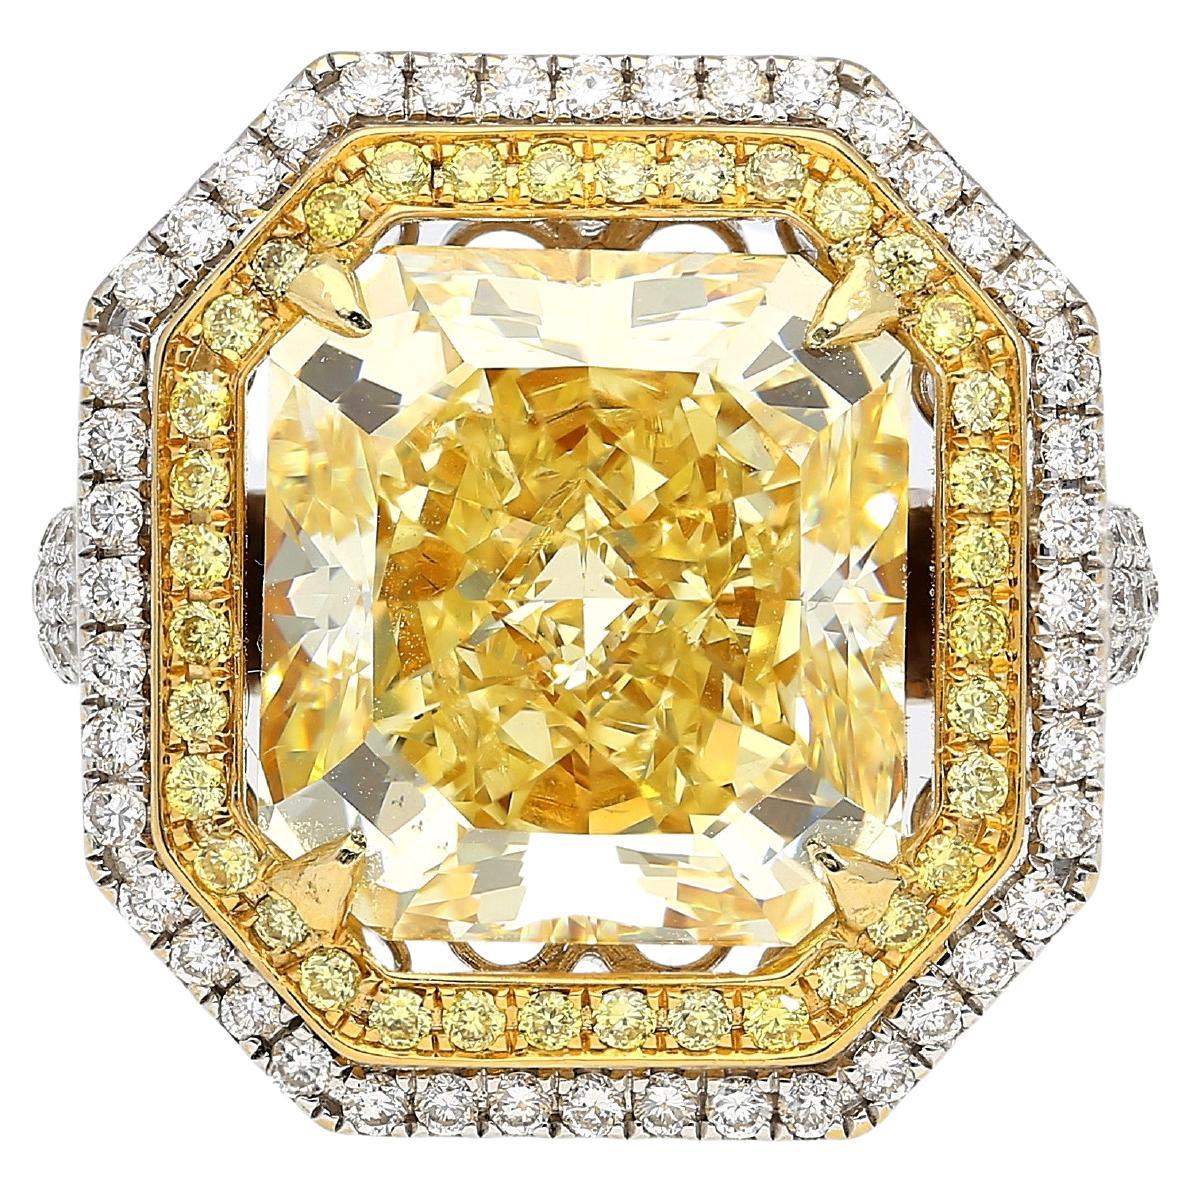 GIA Certified 10.88 Carat Fancy Yellow Radiant Cut Diamond Ring in White Gold